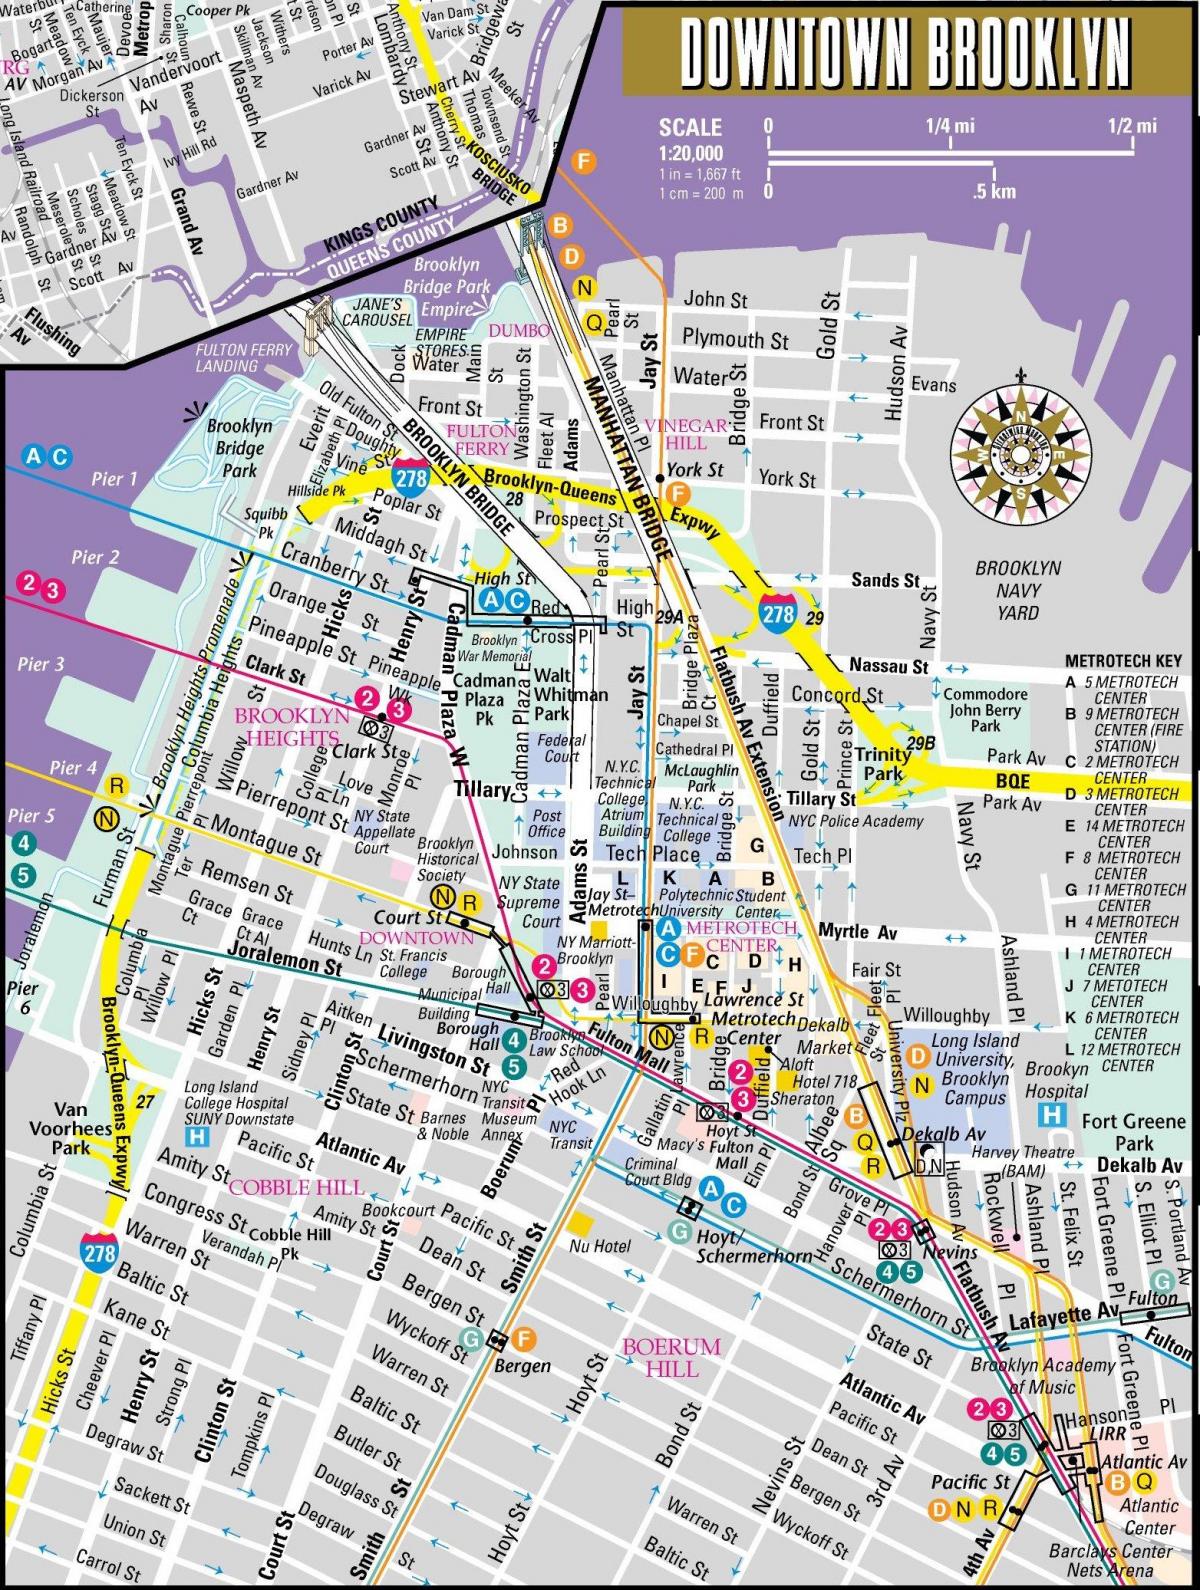 Plan du centre ville de Brooklyn